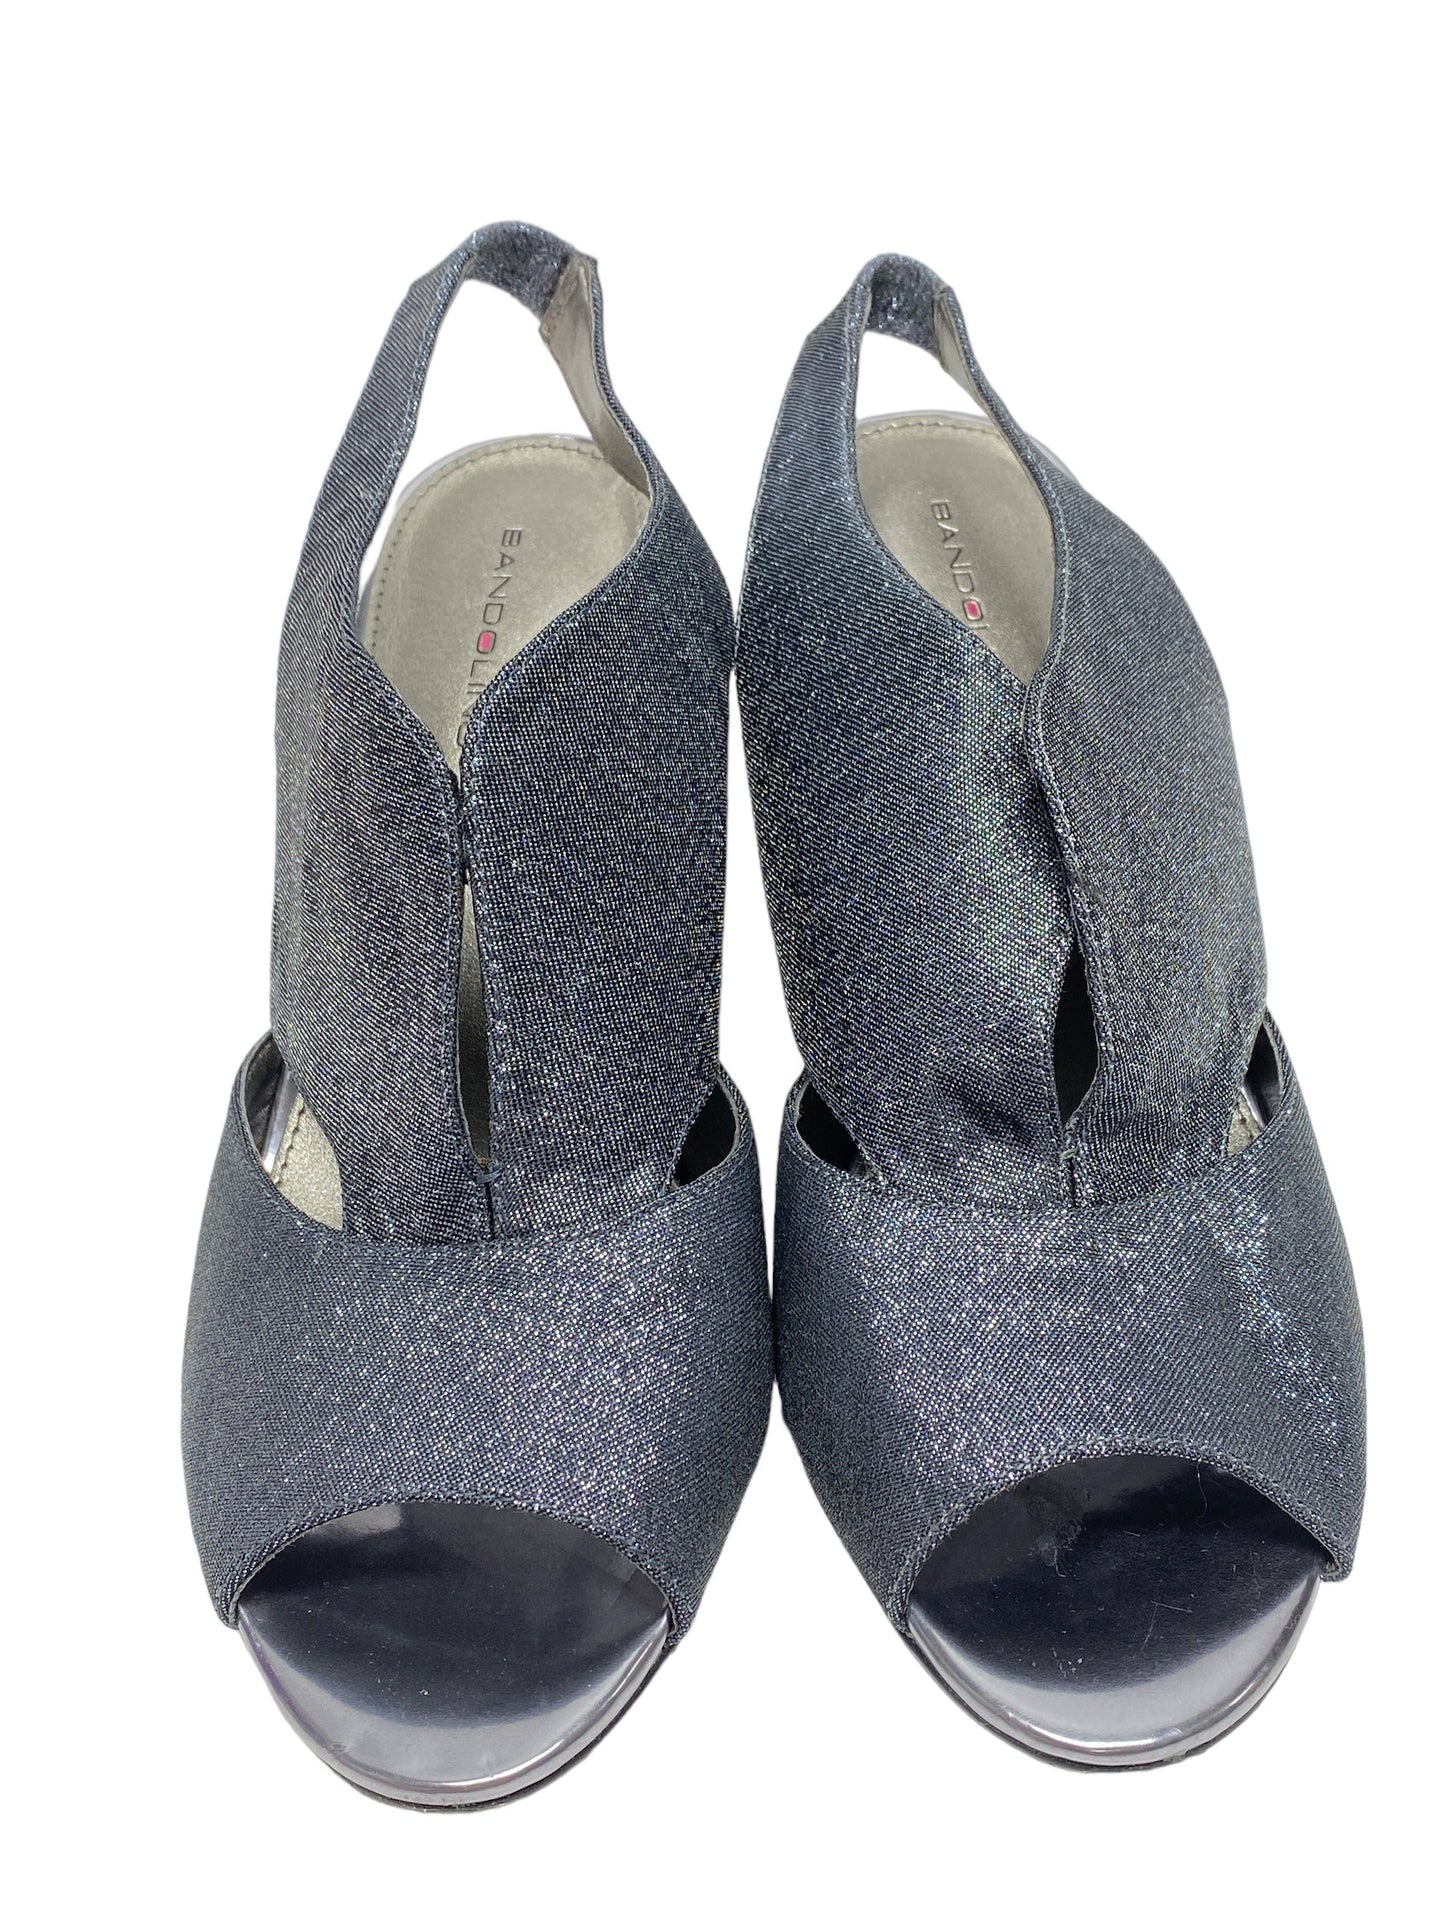 Shoes Heels Stiletto By Bandolino  Size: 8.5